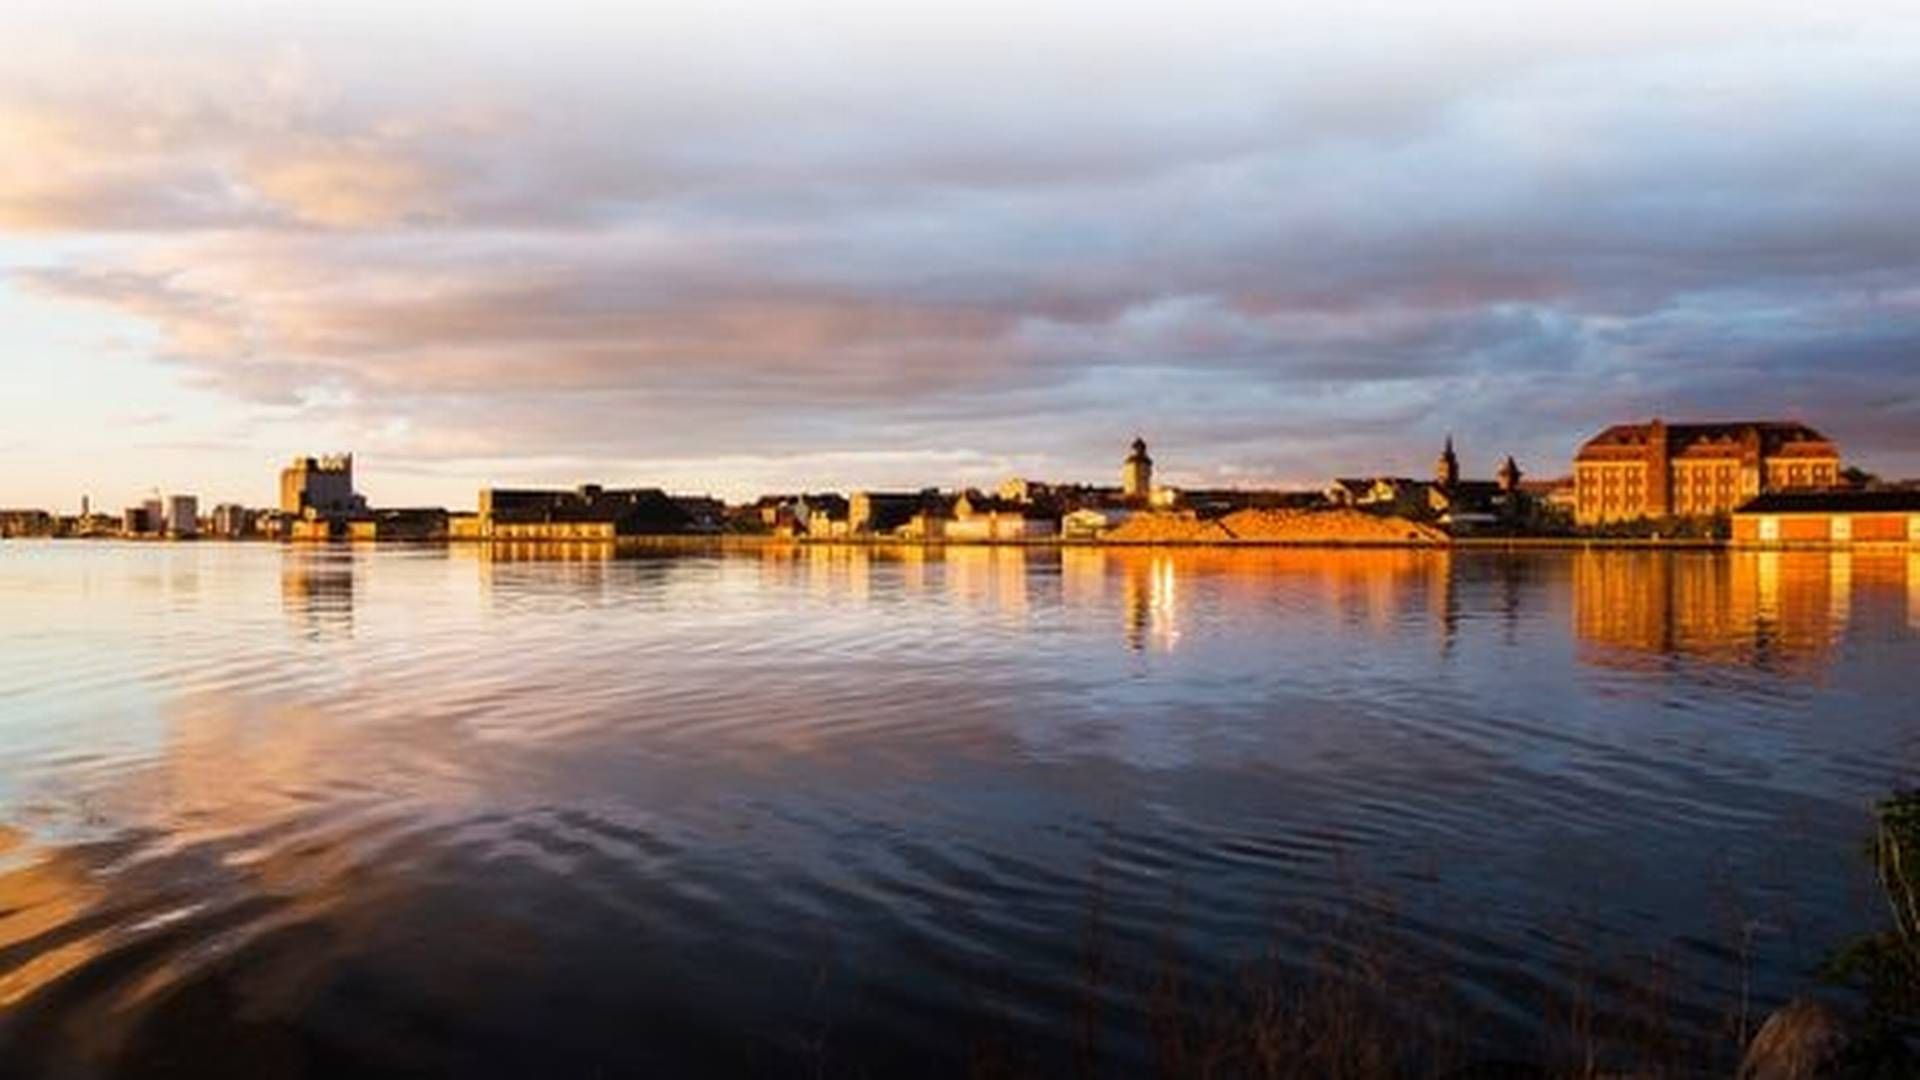 Guldborgsund Kommune vil skabe mere liv omkring byens erhvervshavn. | Foto: PR / Guldborgsund Kommune